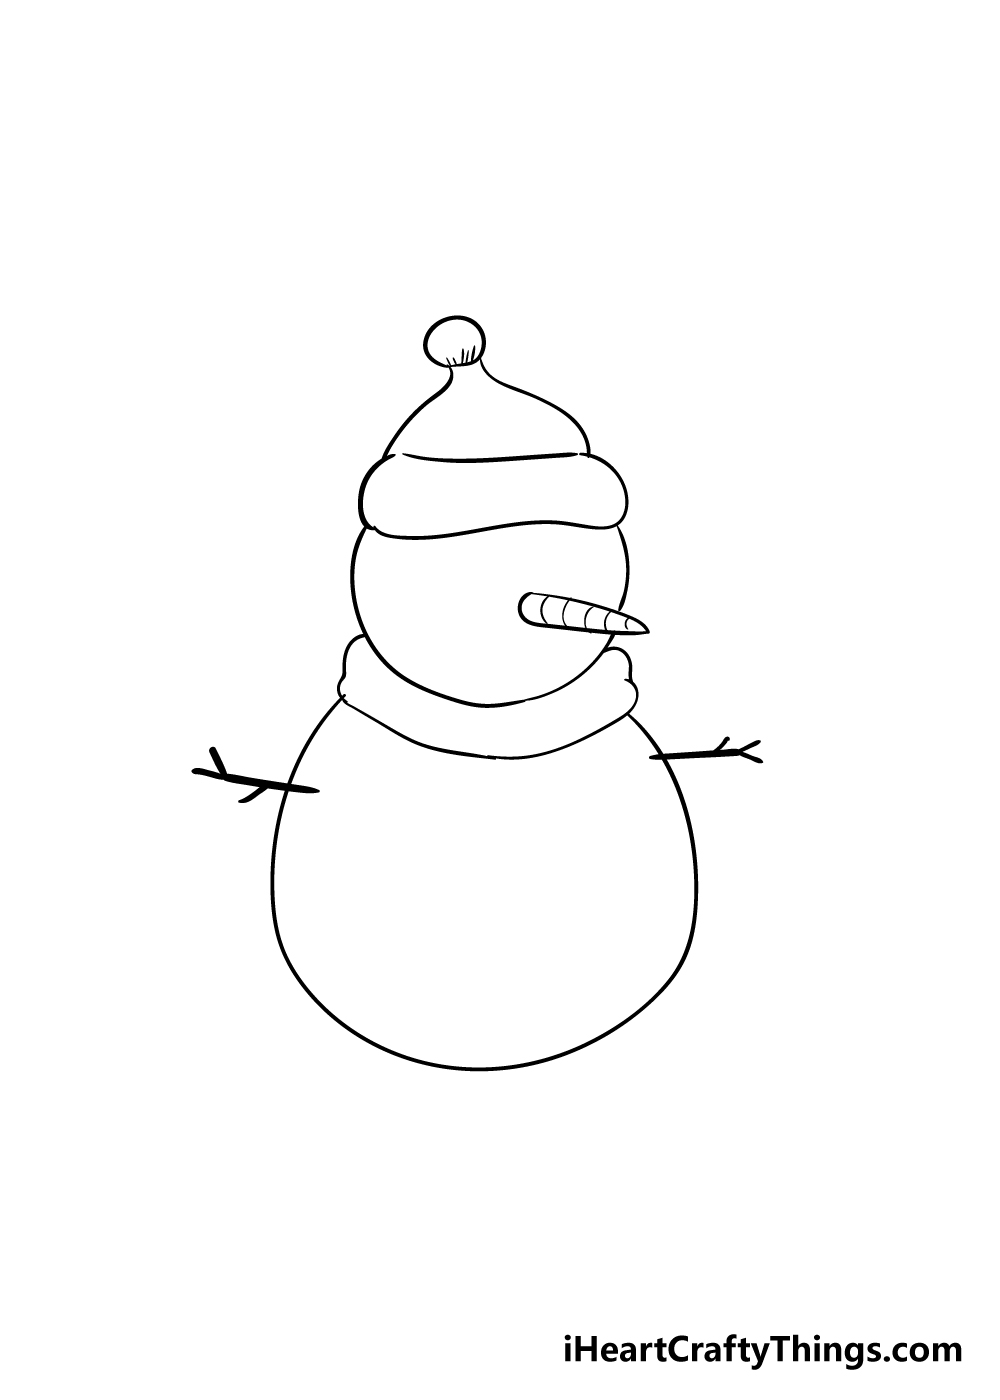 snowman drawing step 4